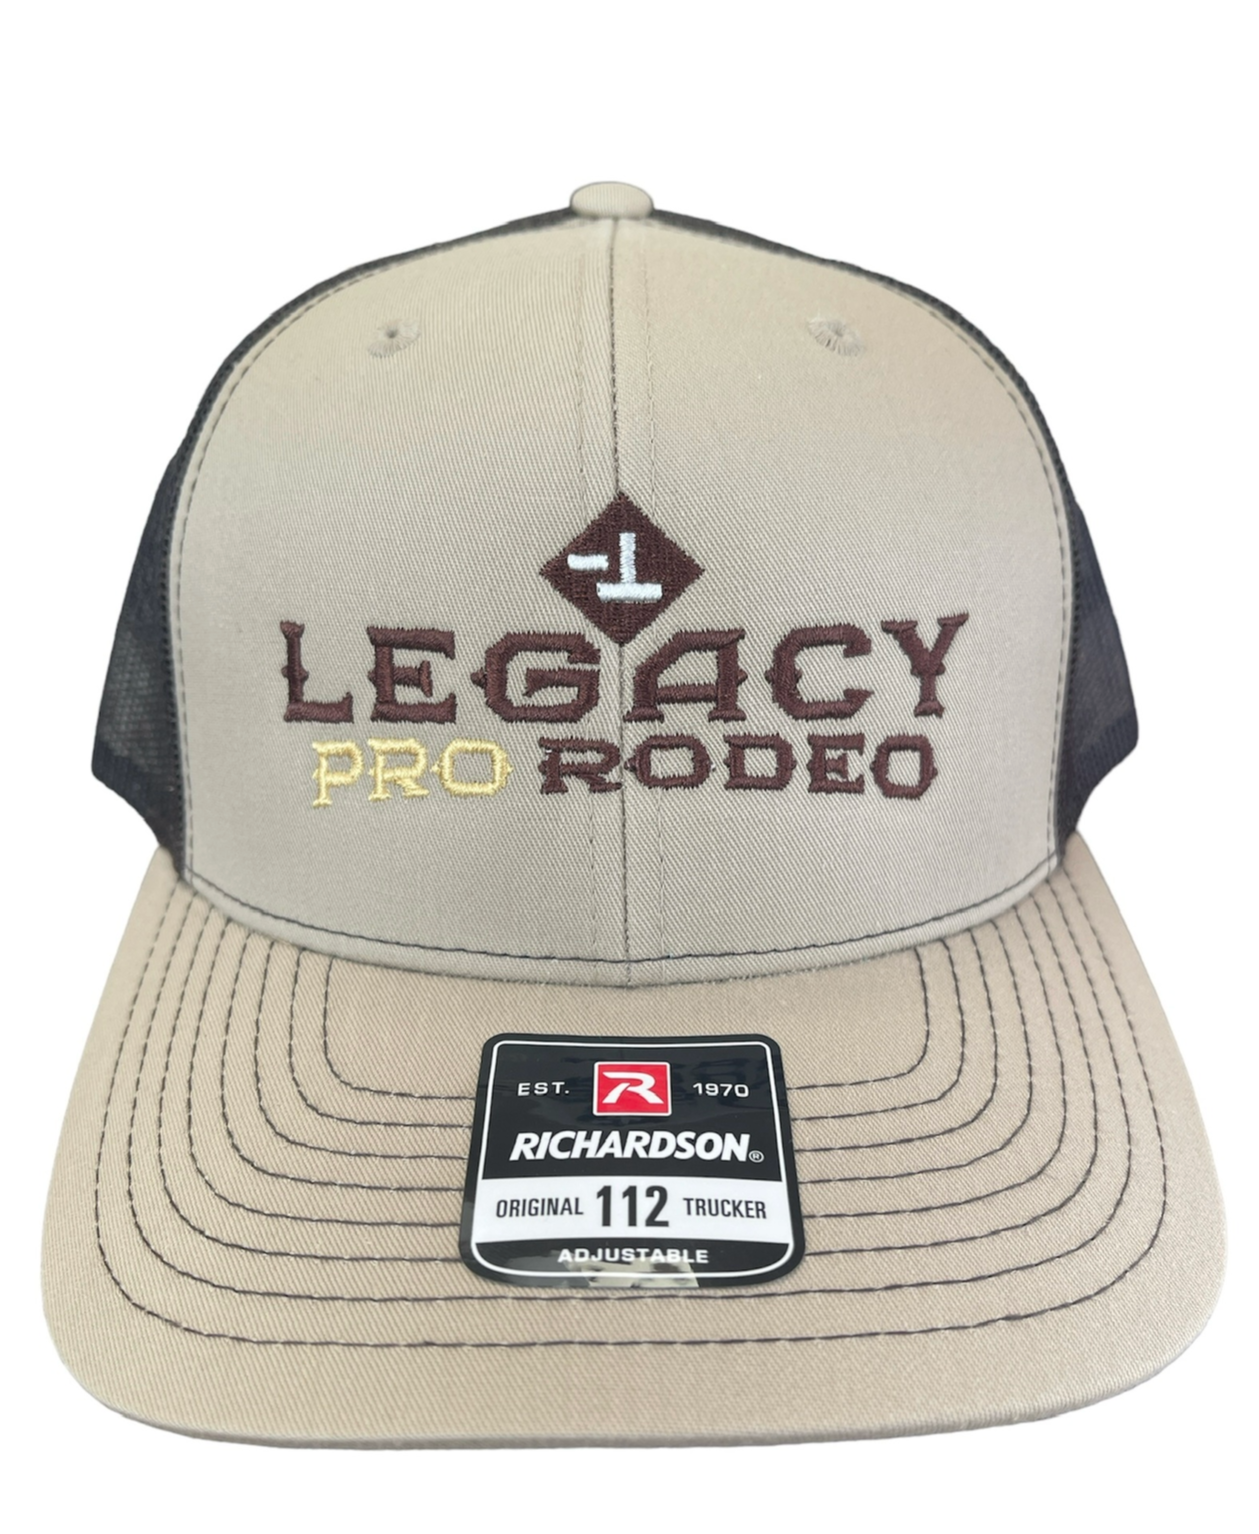 Legacy Pro Rodeo Snapback Trucker Cap